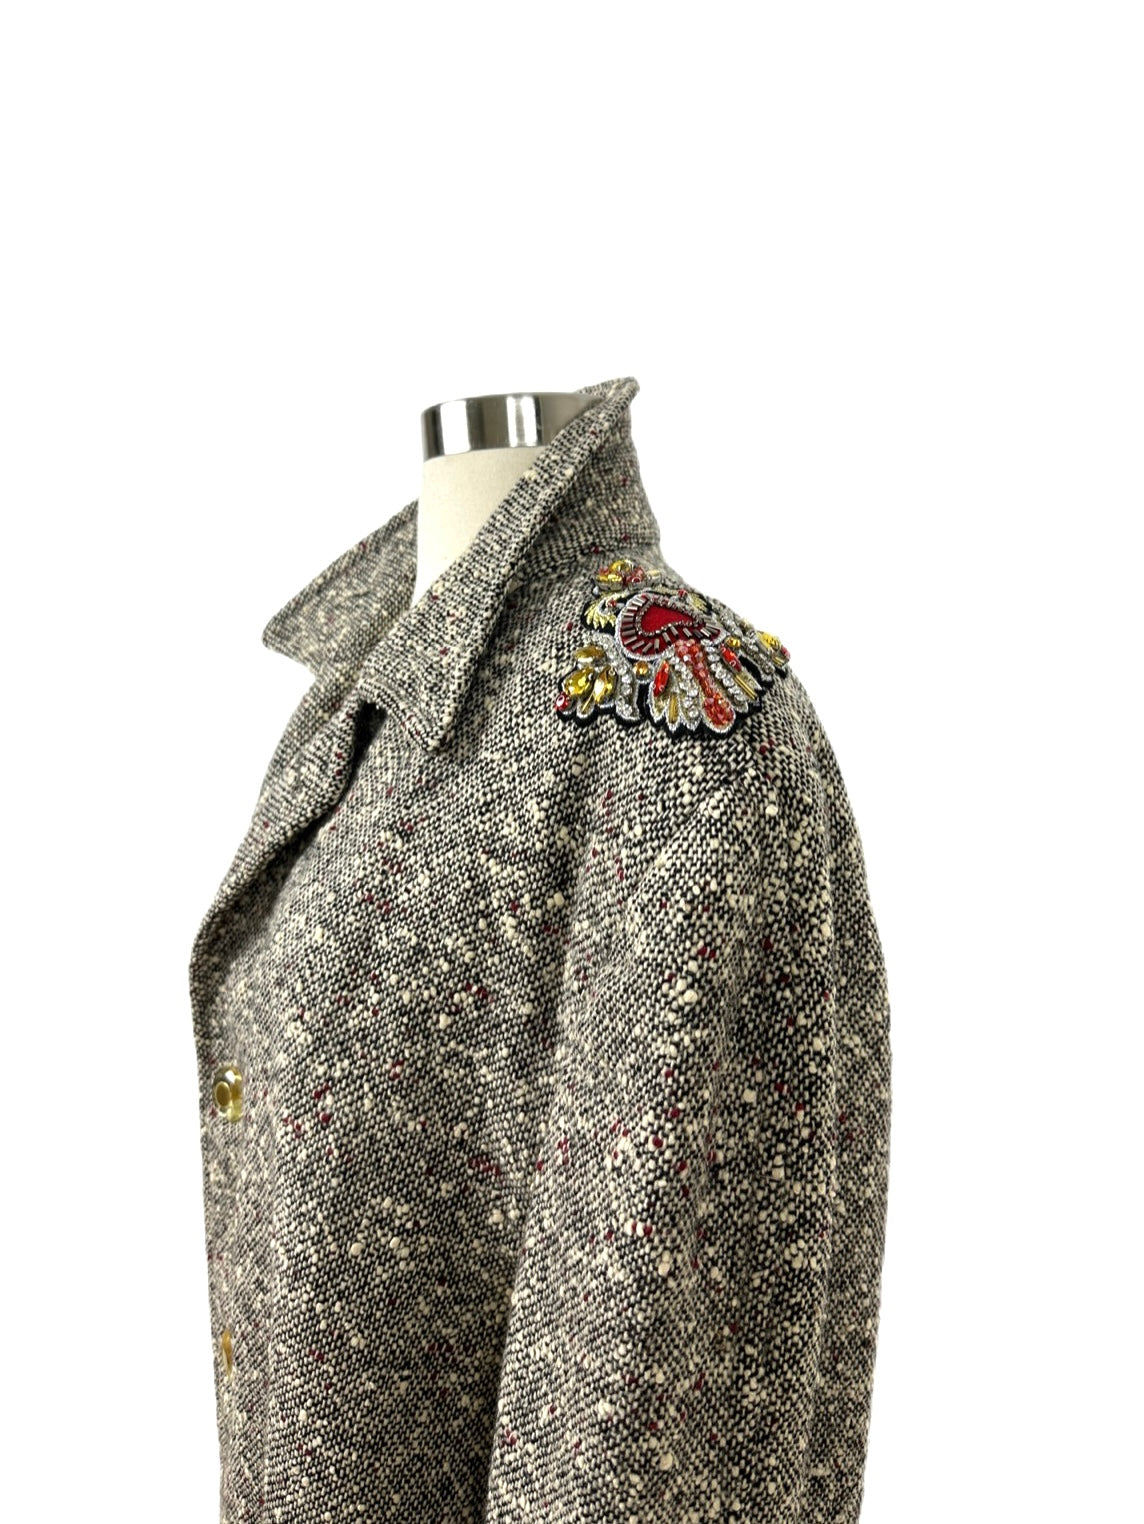 Vintage Coat adorned by Jen Wonders